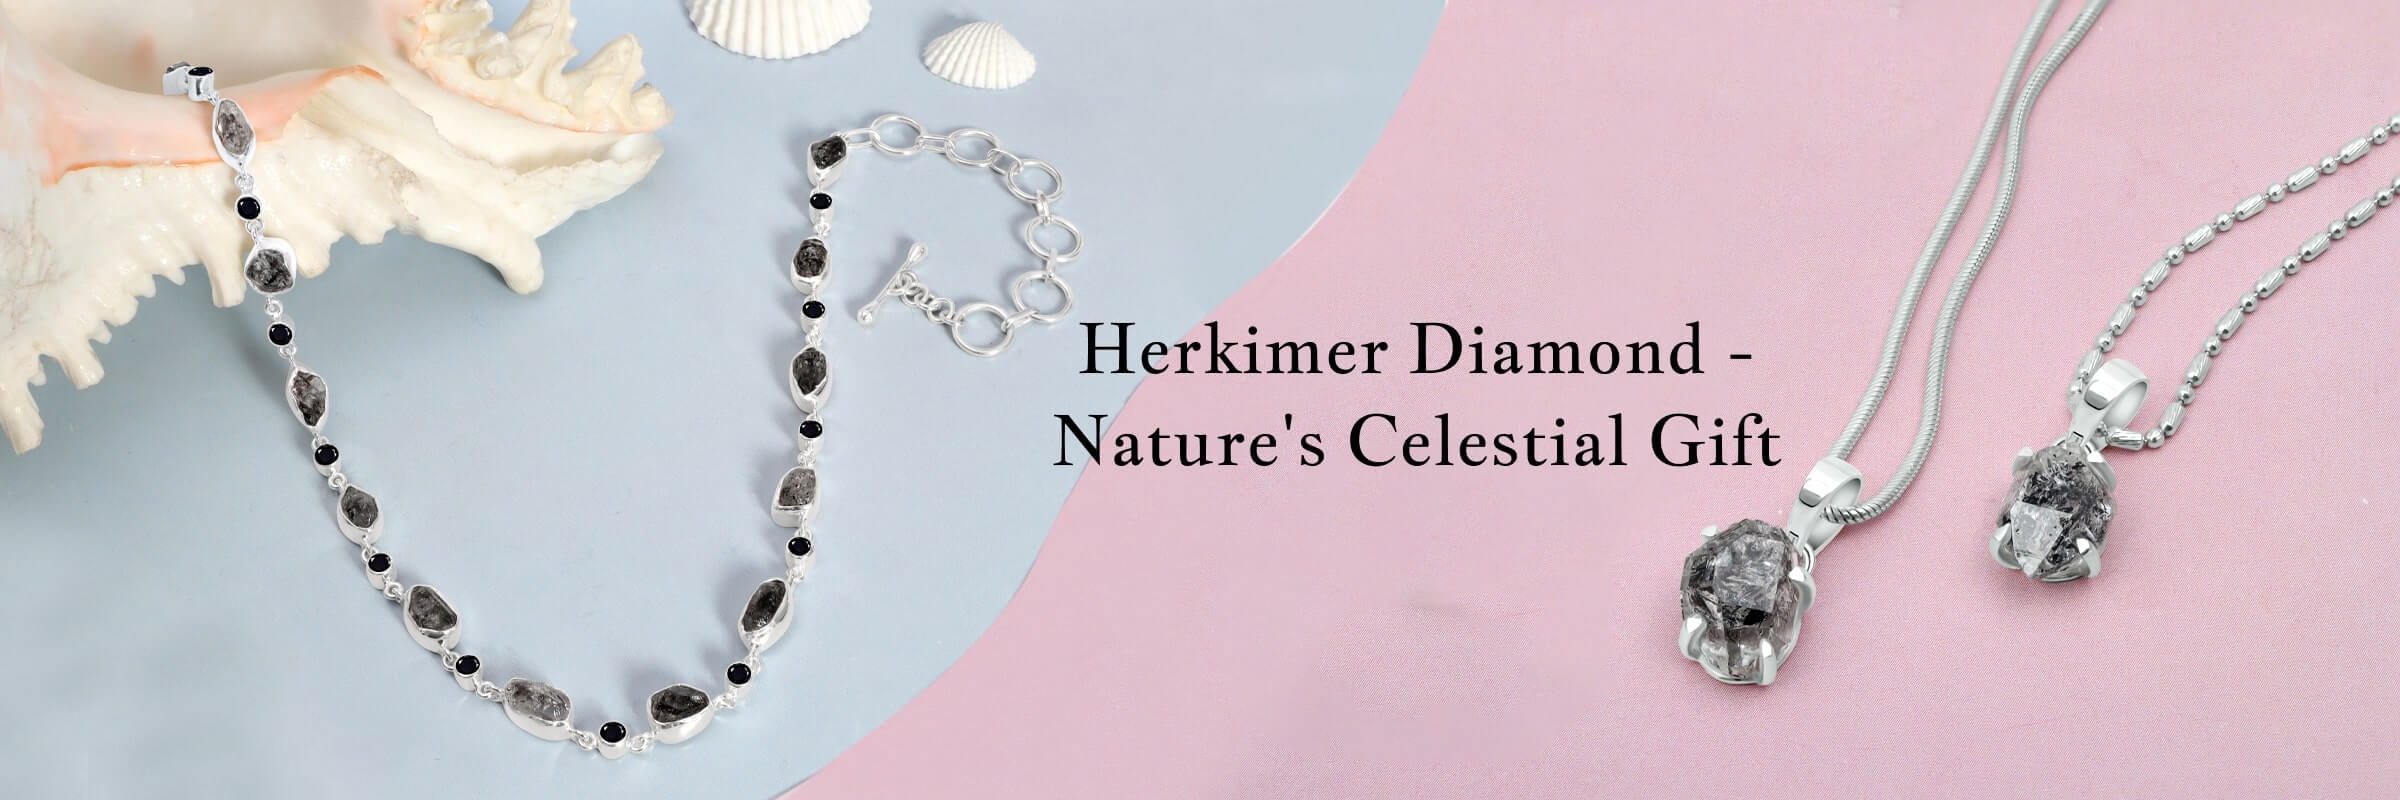 Herkimer Diamond Benefits, Healing Properties, Zodiac Signs, Uses, Cost